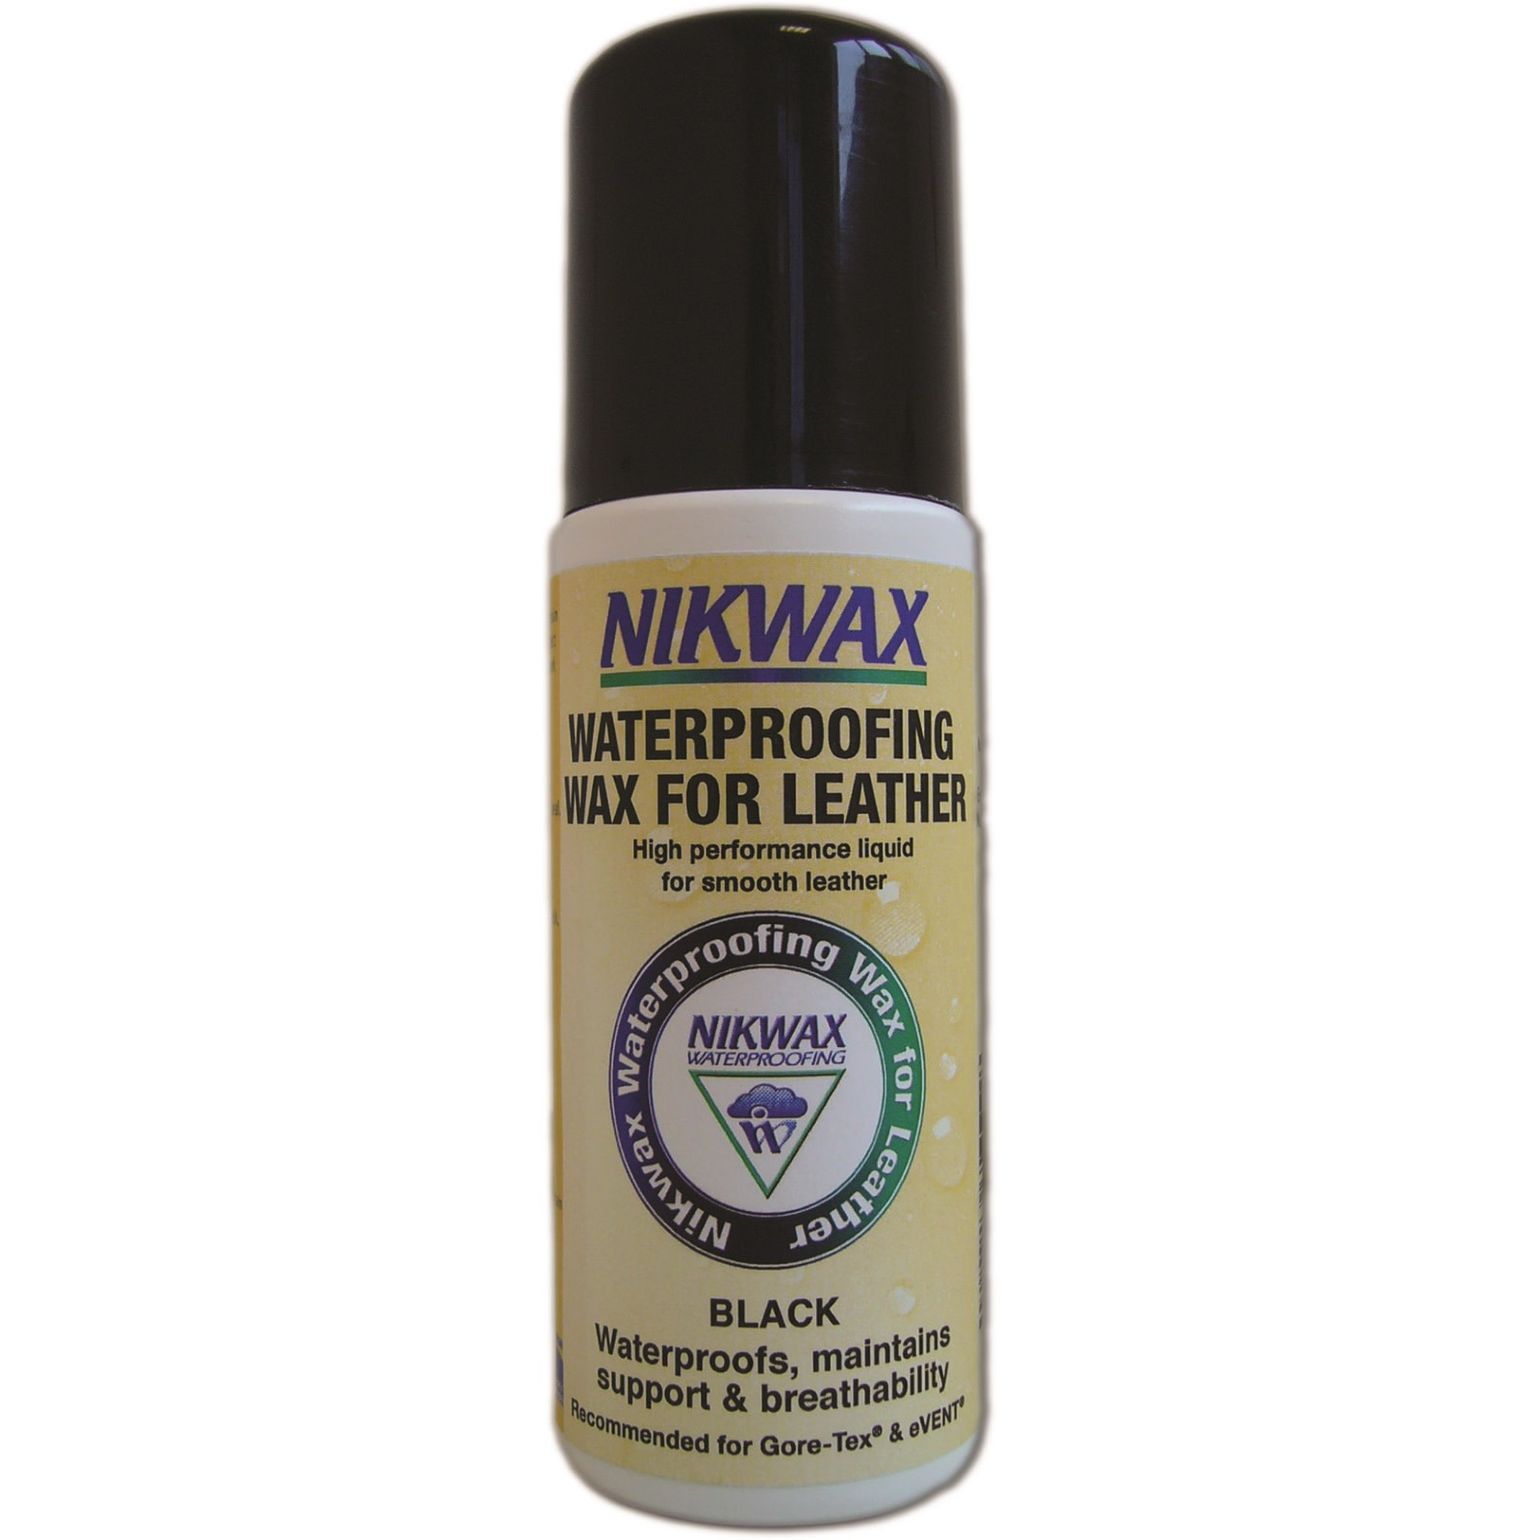 Nikwax Waterproofing Wax for Leather Black